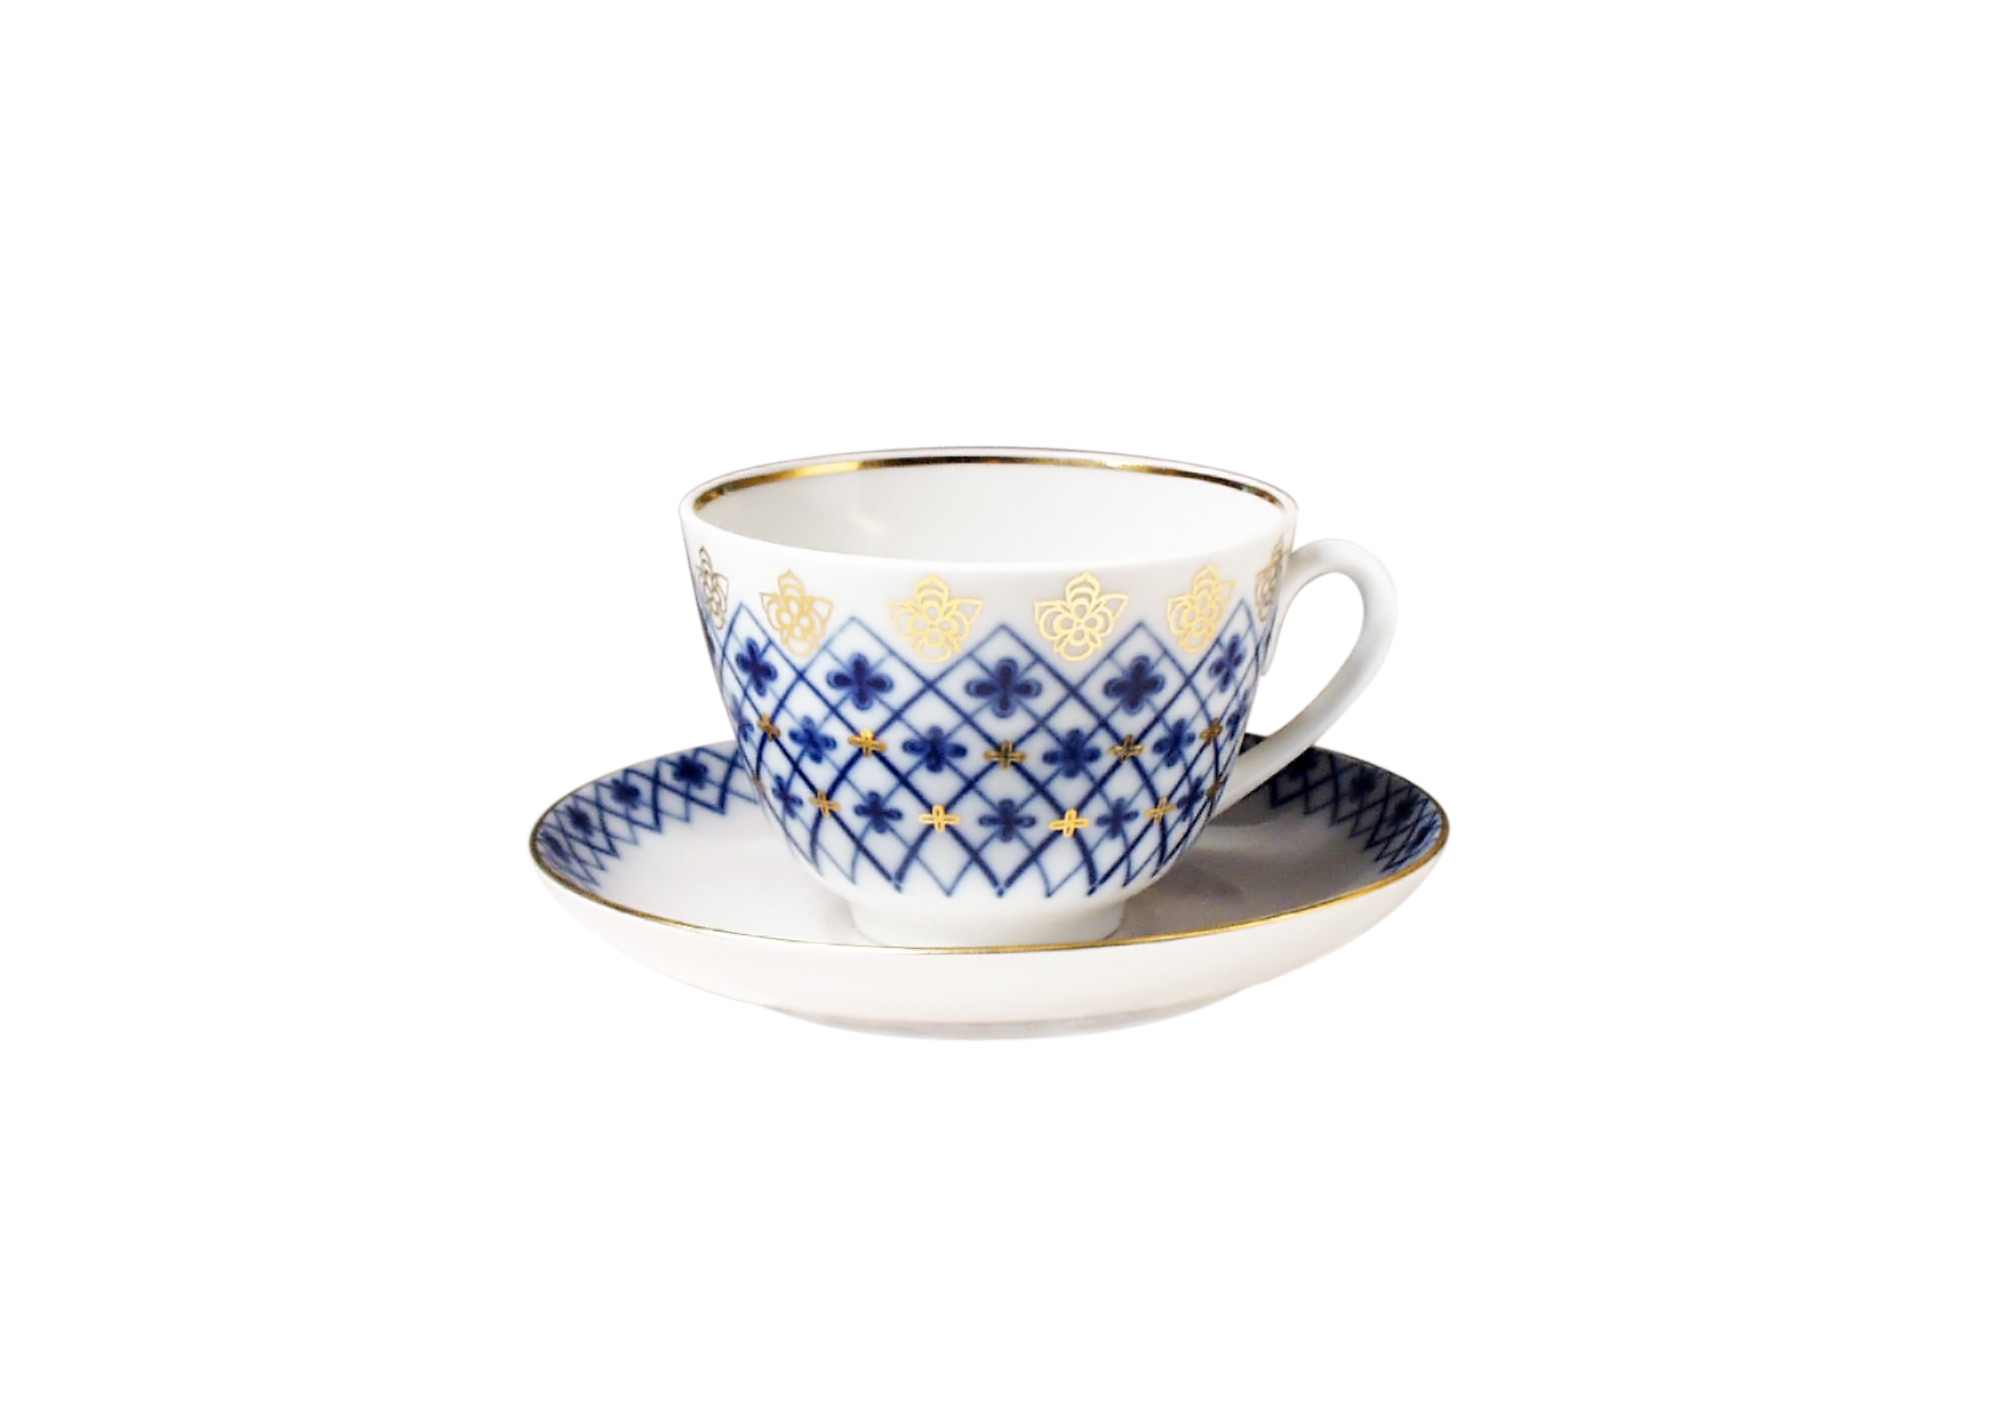 Buy Snowflake Porcelain Cup & Saucer at GoldenCockerel.com